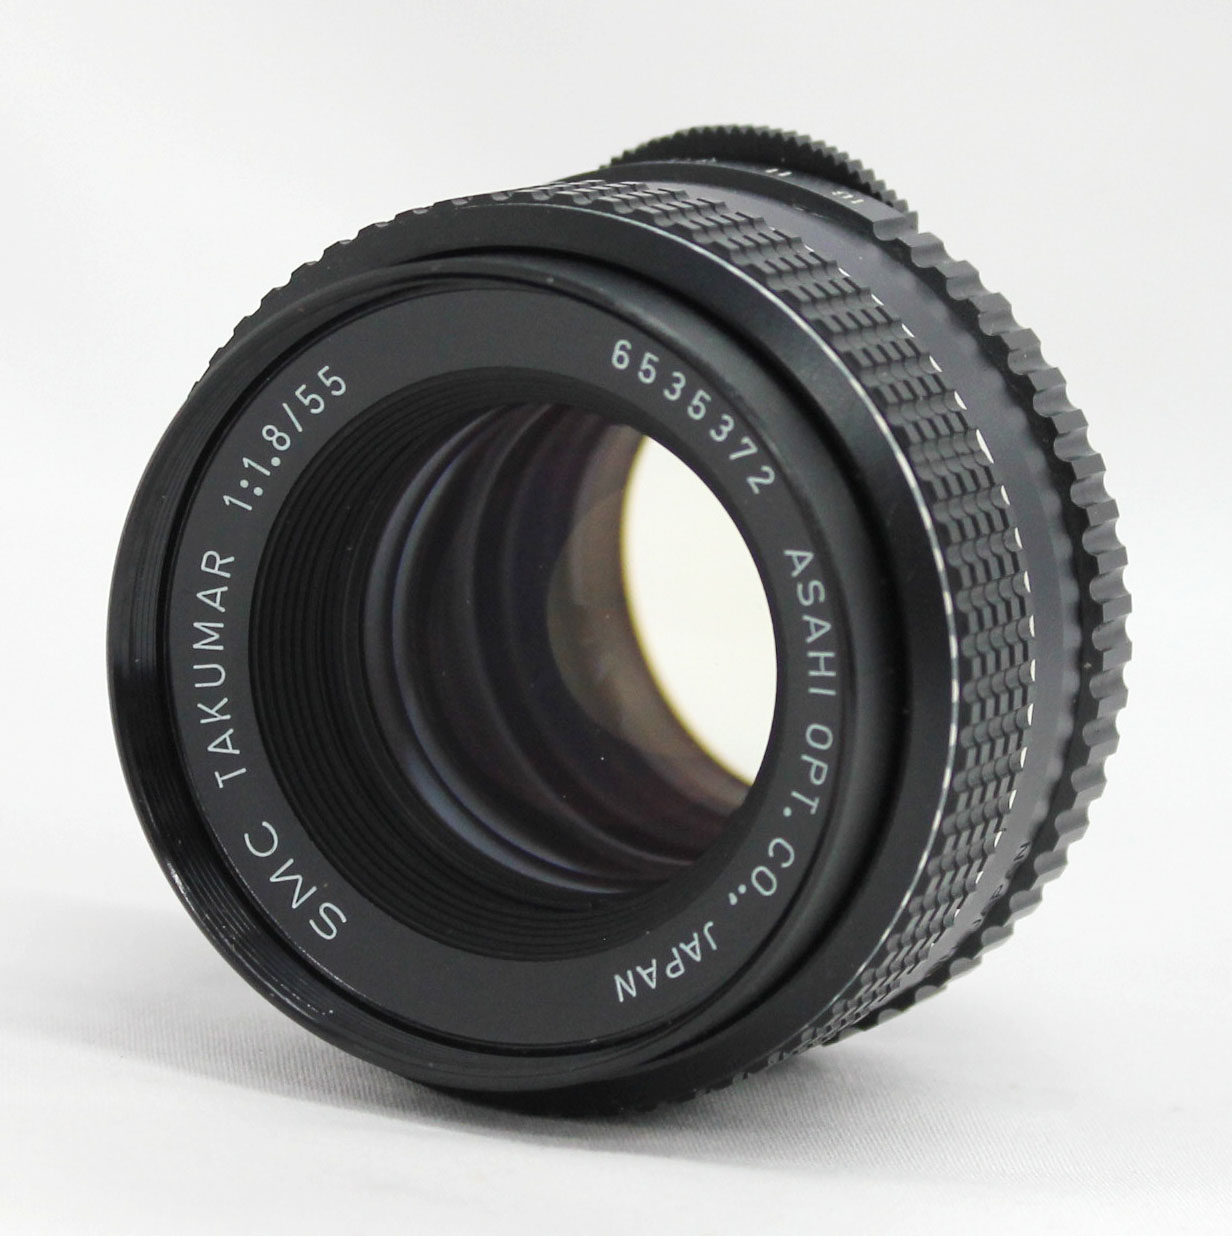 Asahi Pentax Spotmatic F SPF 35mm SLR Camera w/ SMC Takumar 55mm F/1.8 Lens from Japan Photo 12